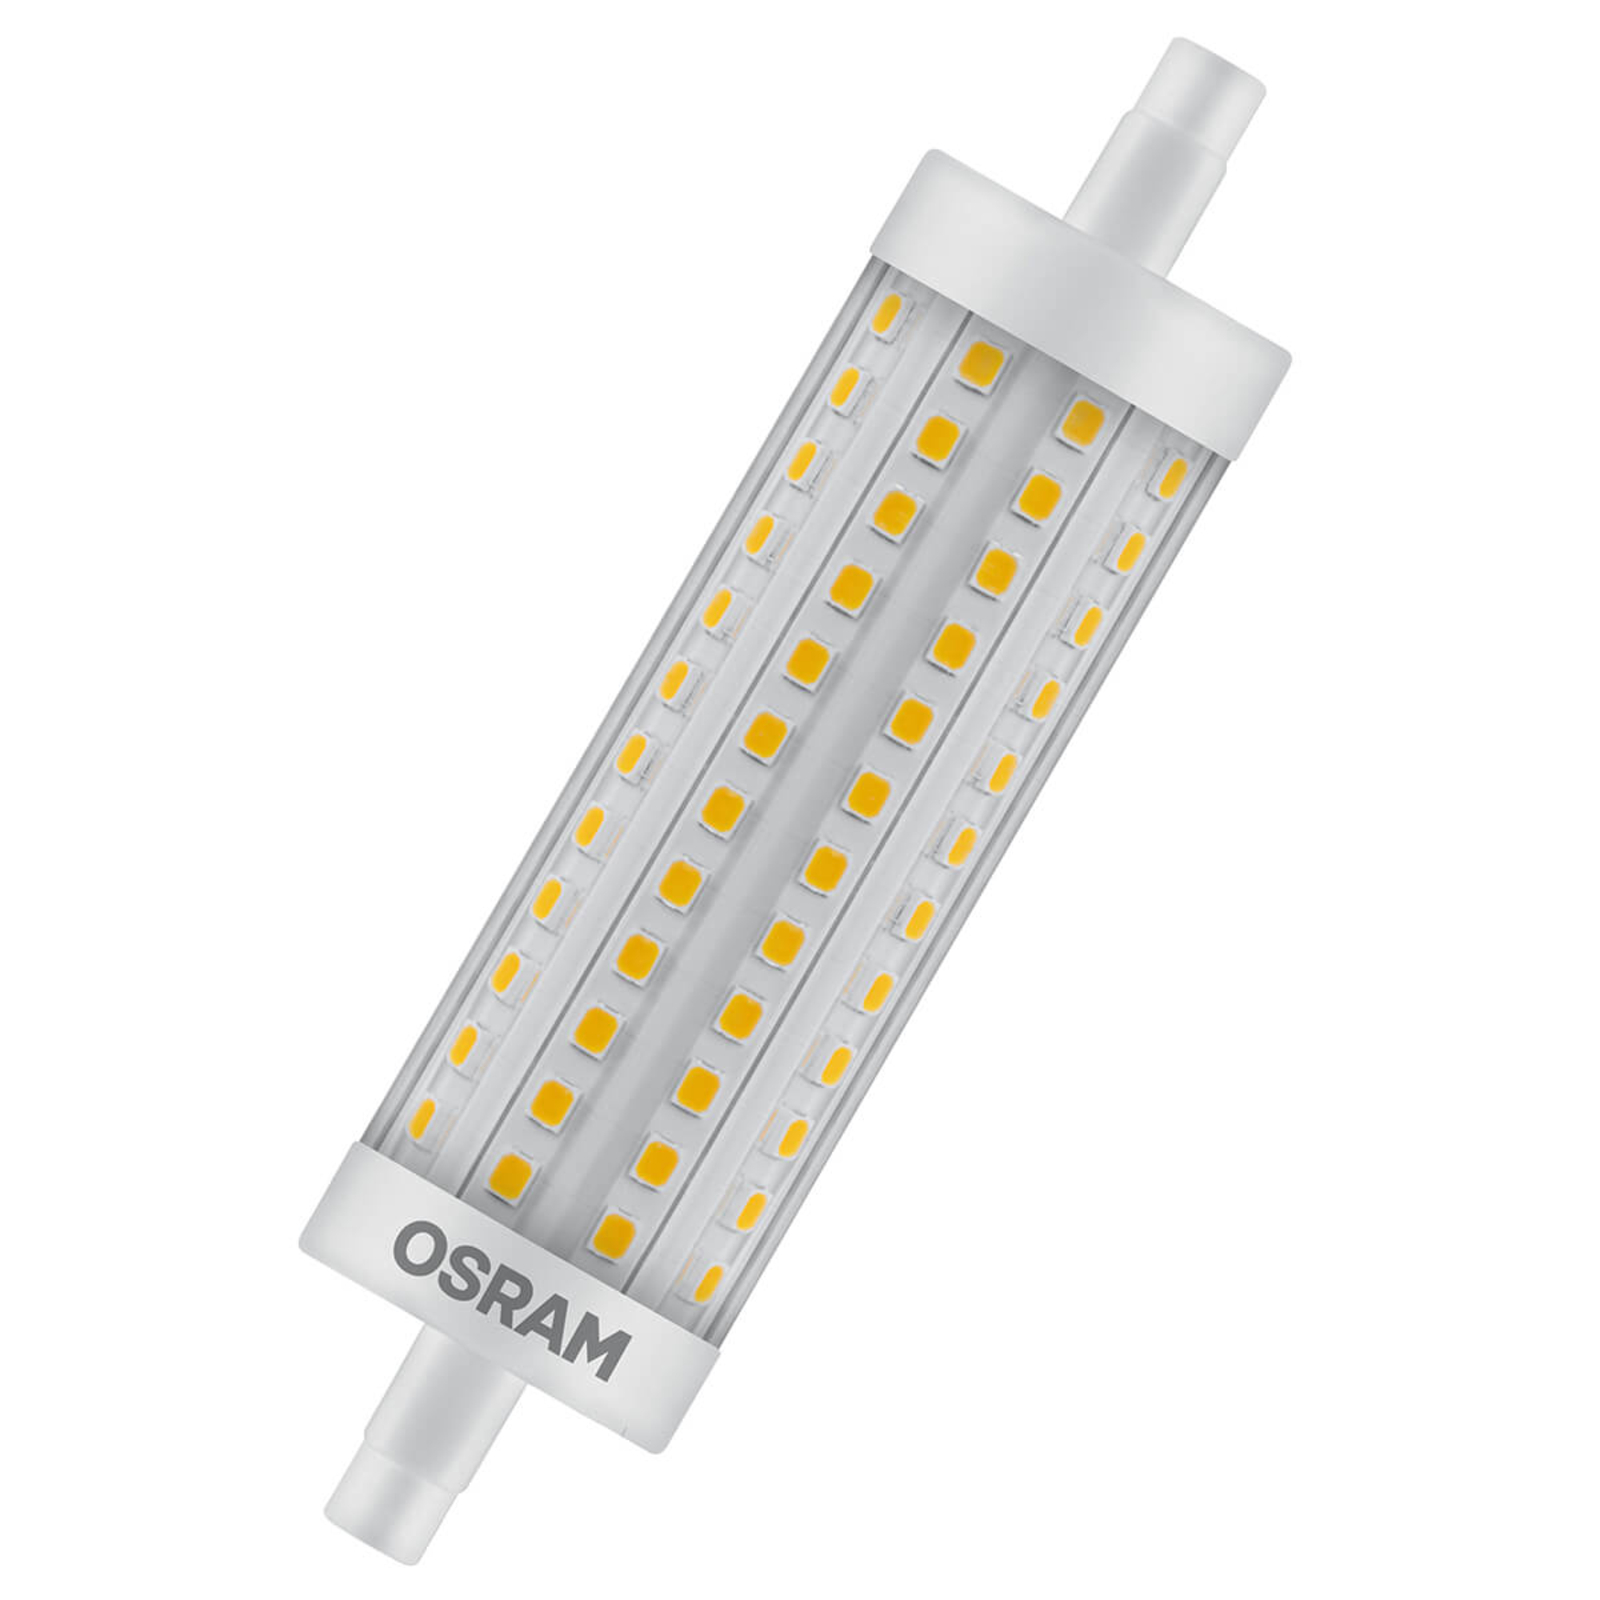 OSRAM LED staaflamp R7s 15W 11,8cm 827 dimbaar